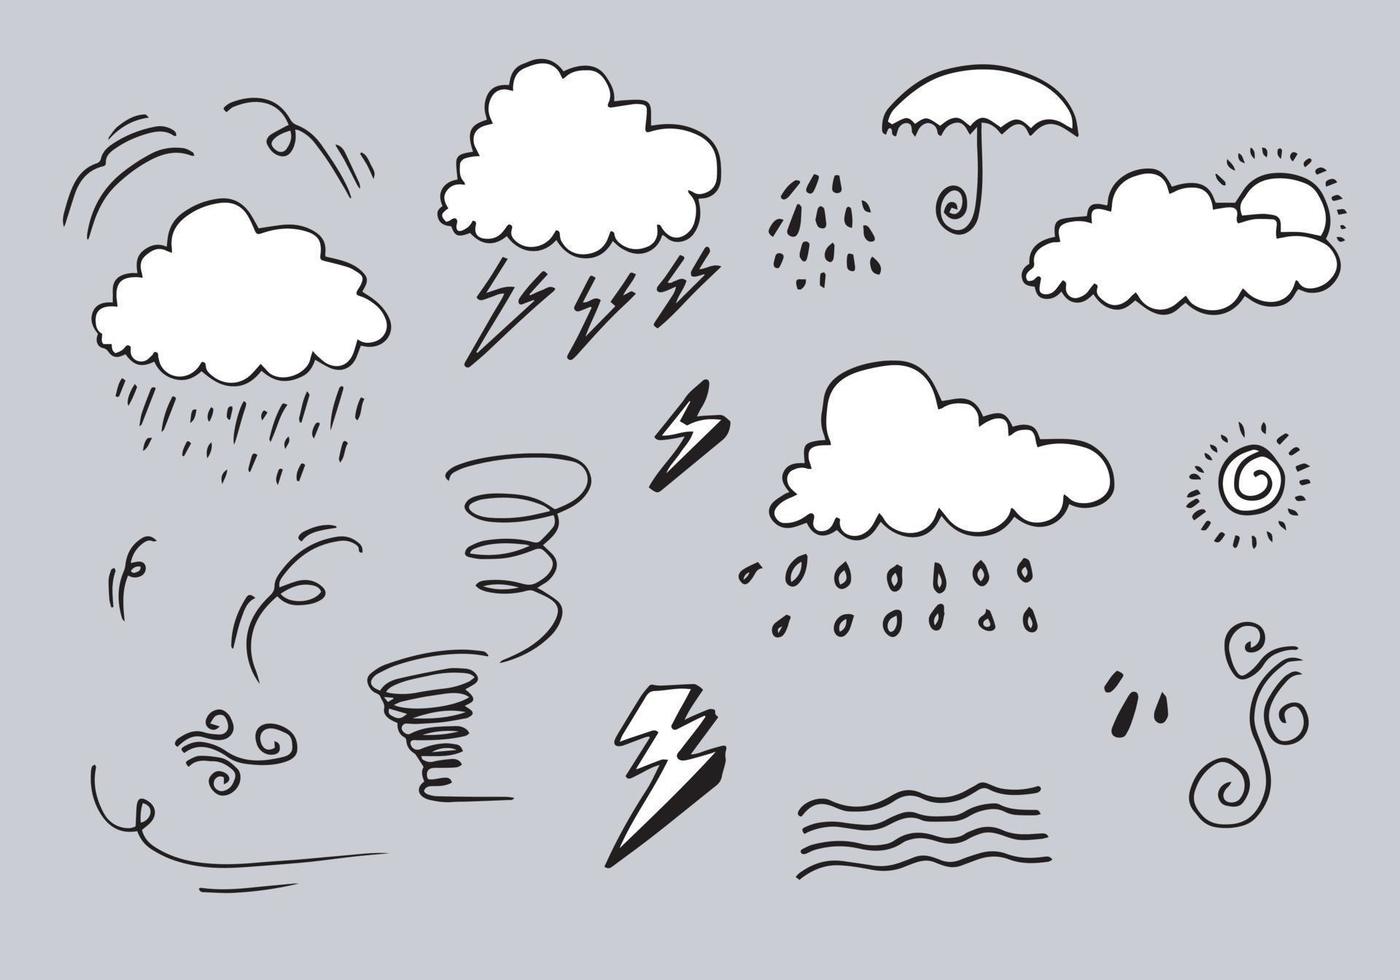 väder doodle vektor set illustration med handritad linje konst stil vektor